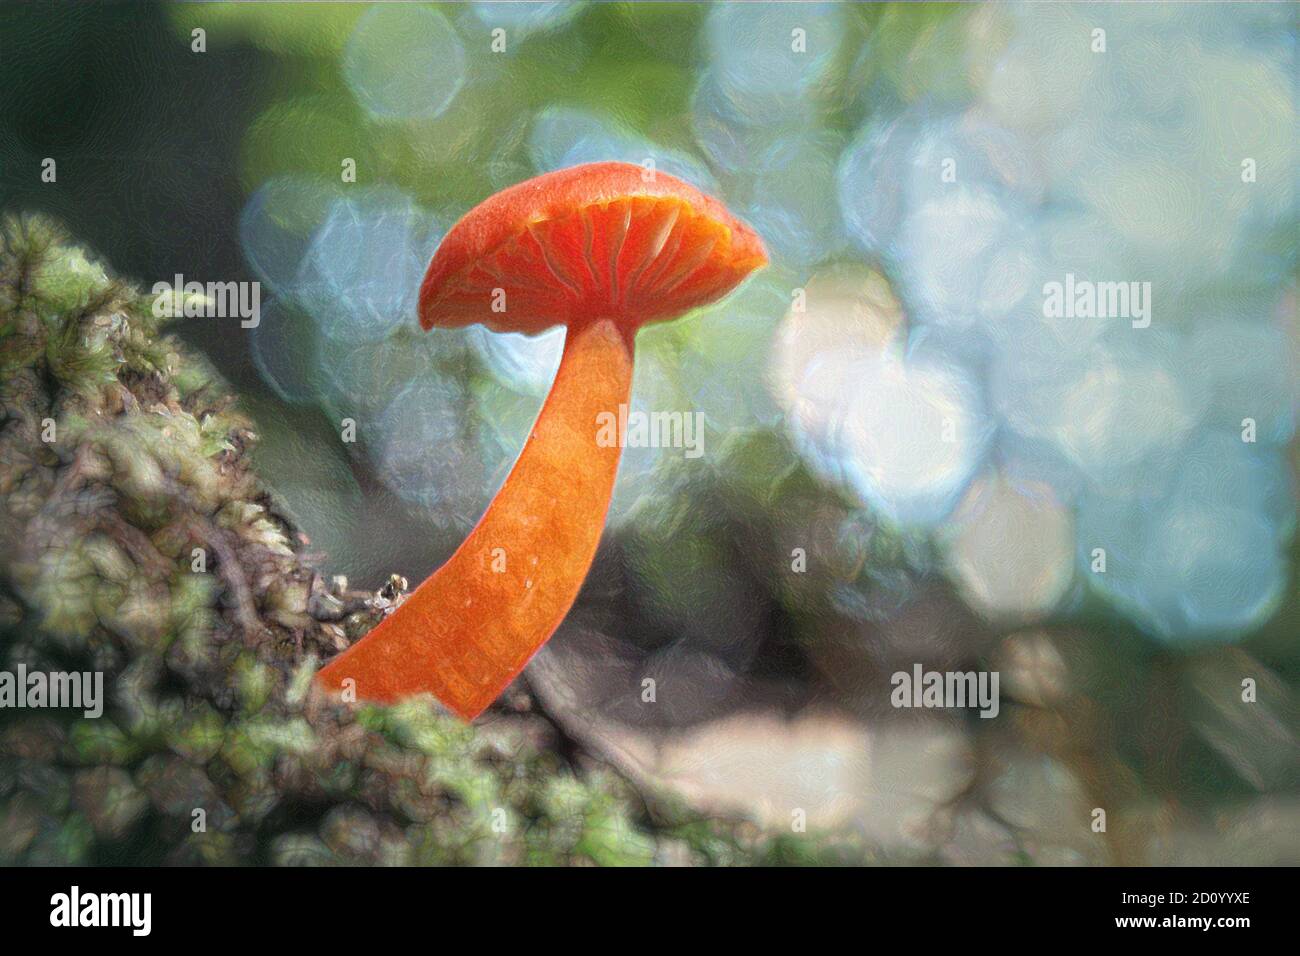 Bright orange colored Hygrocybe mushroom close up Stock Photo